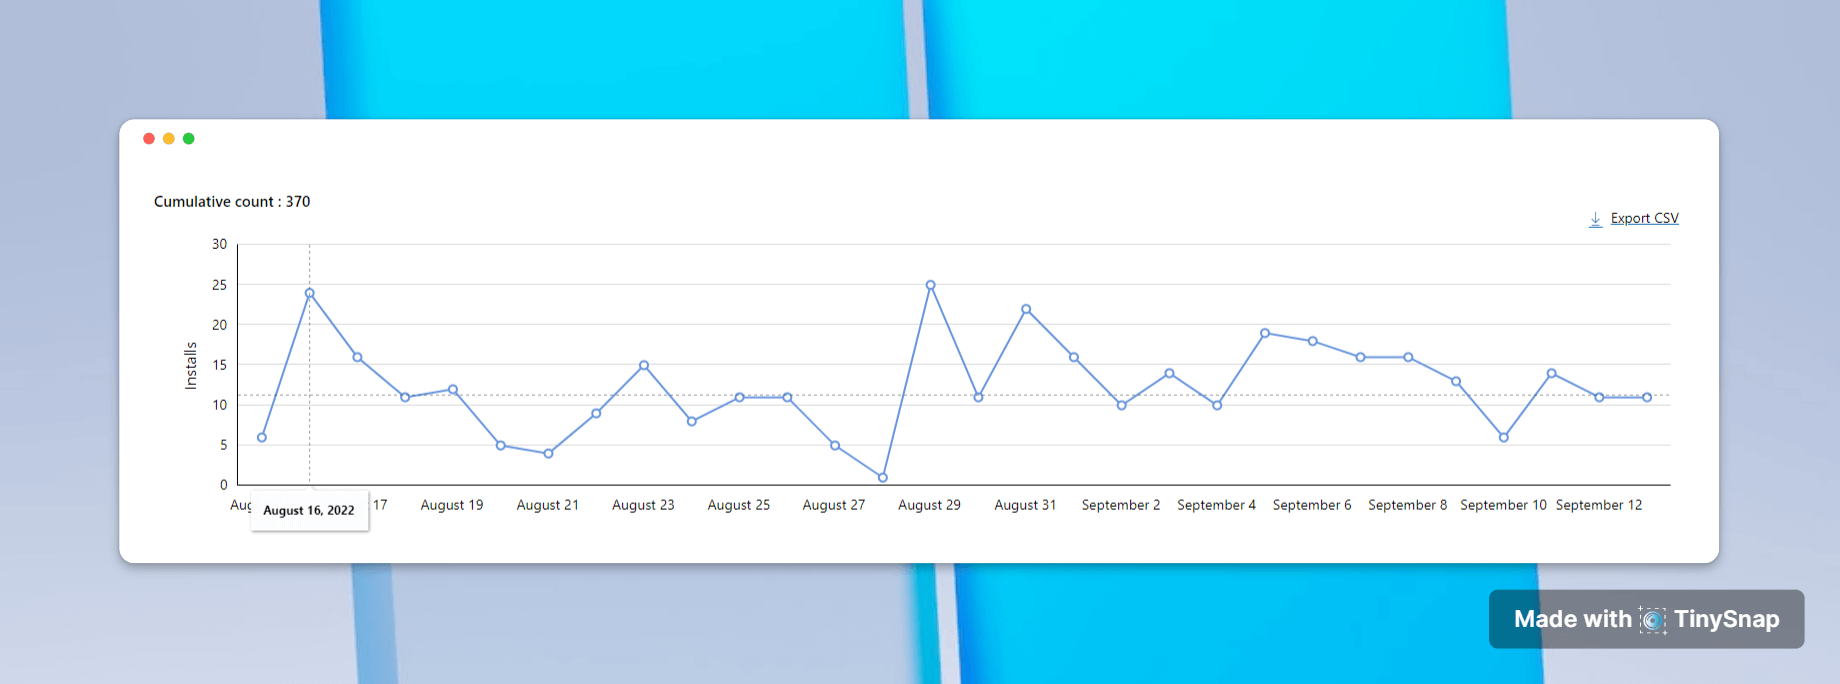 TinySnap: First Month Breakdown Report